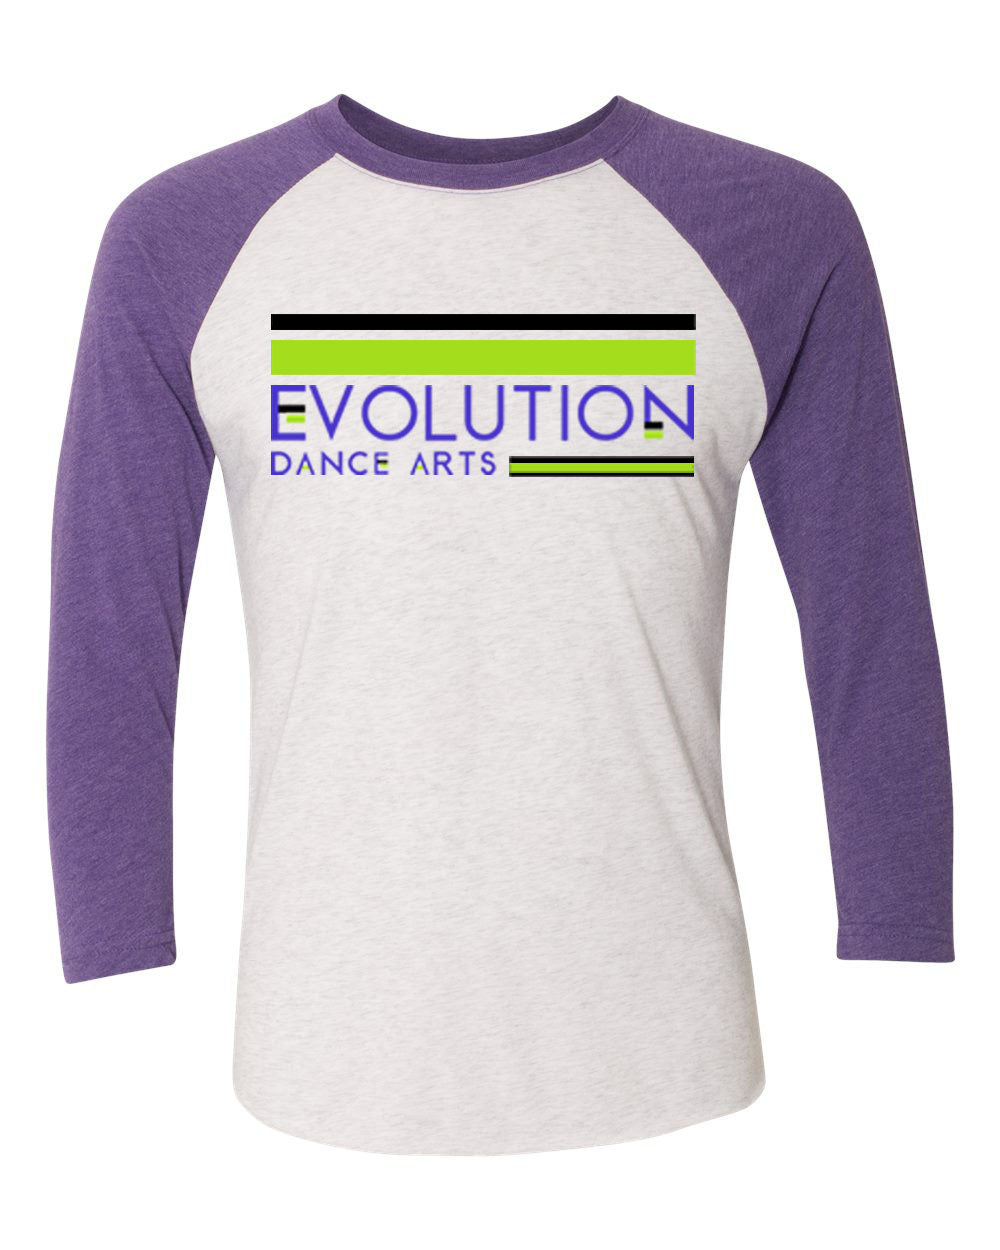 Evolution Dance Arts design 3 raglan shirt